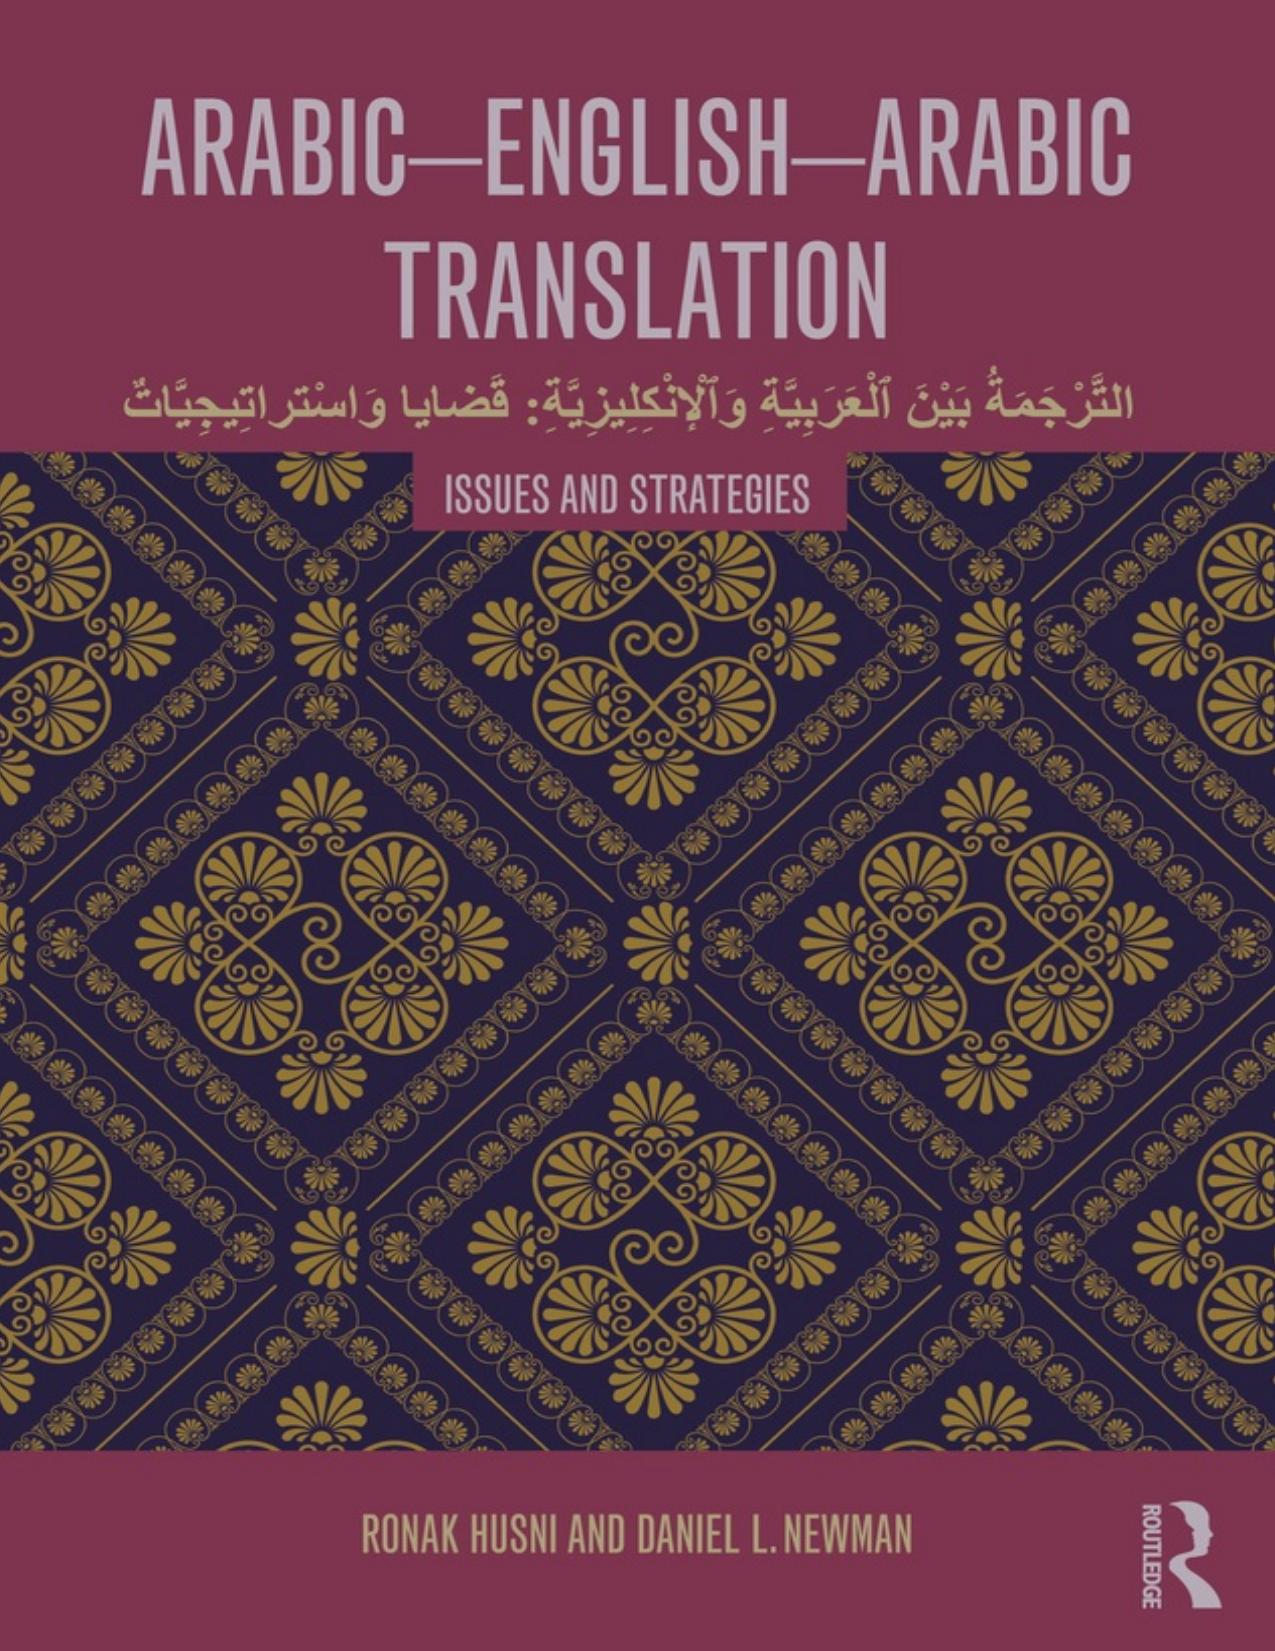 Arabic-English-Arabic Translation: Issues and Strategies - PDFDrive.com